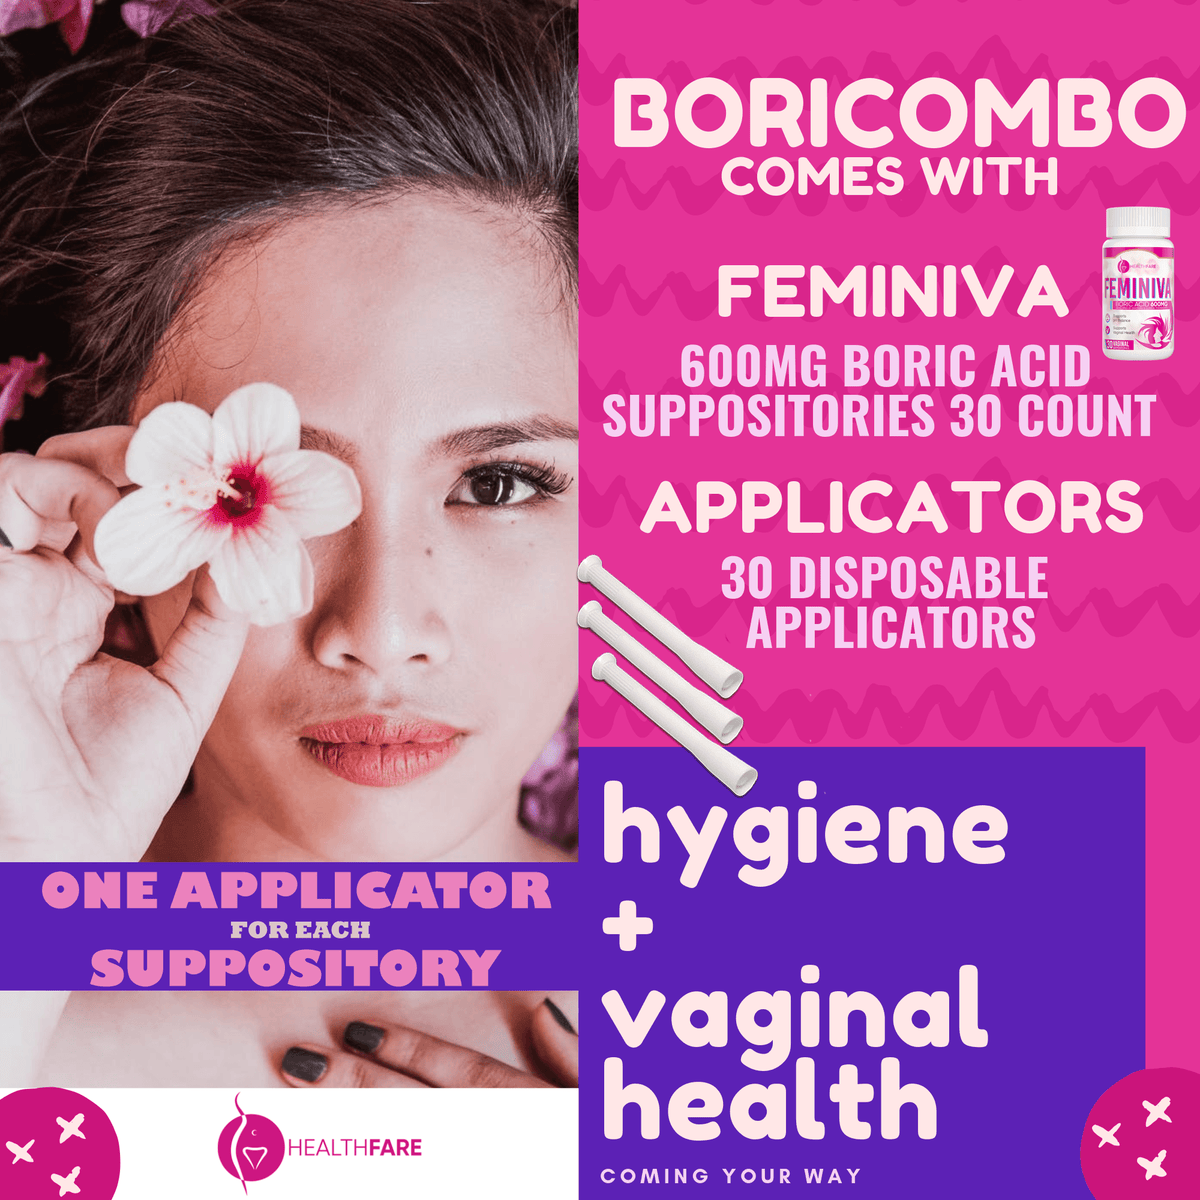 BoriCombo - Feminiva Boric Acid Suppositories 600MG - 30 Count with 30 Vaginal Applicators - HealthFare